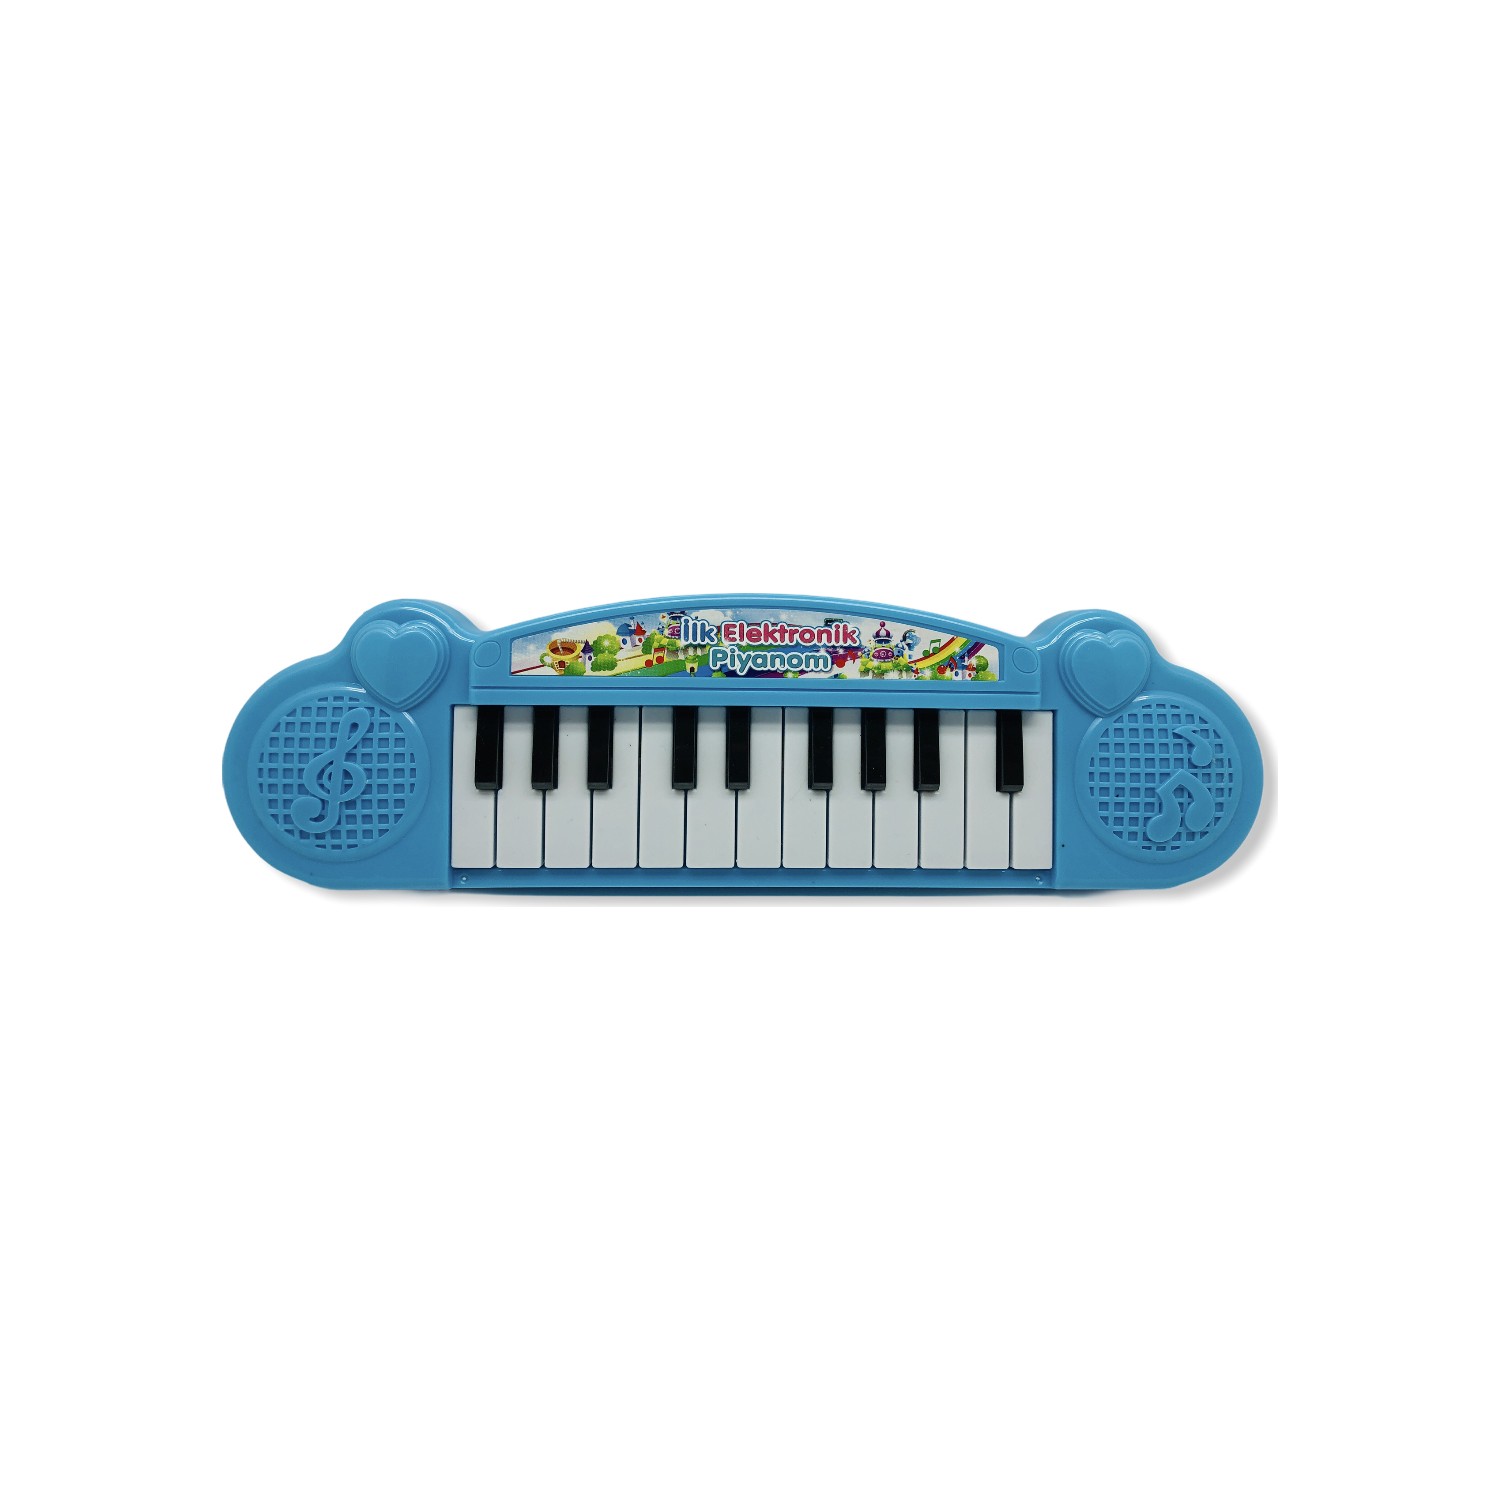 Medska Piyano 22 Tuşlu Sesli Ilk Elektronik Piyanom Mavi